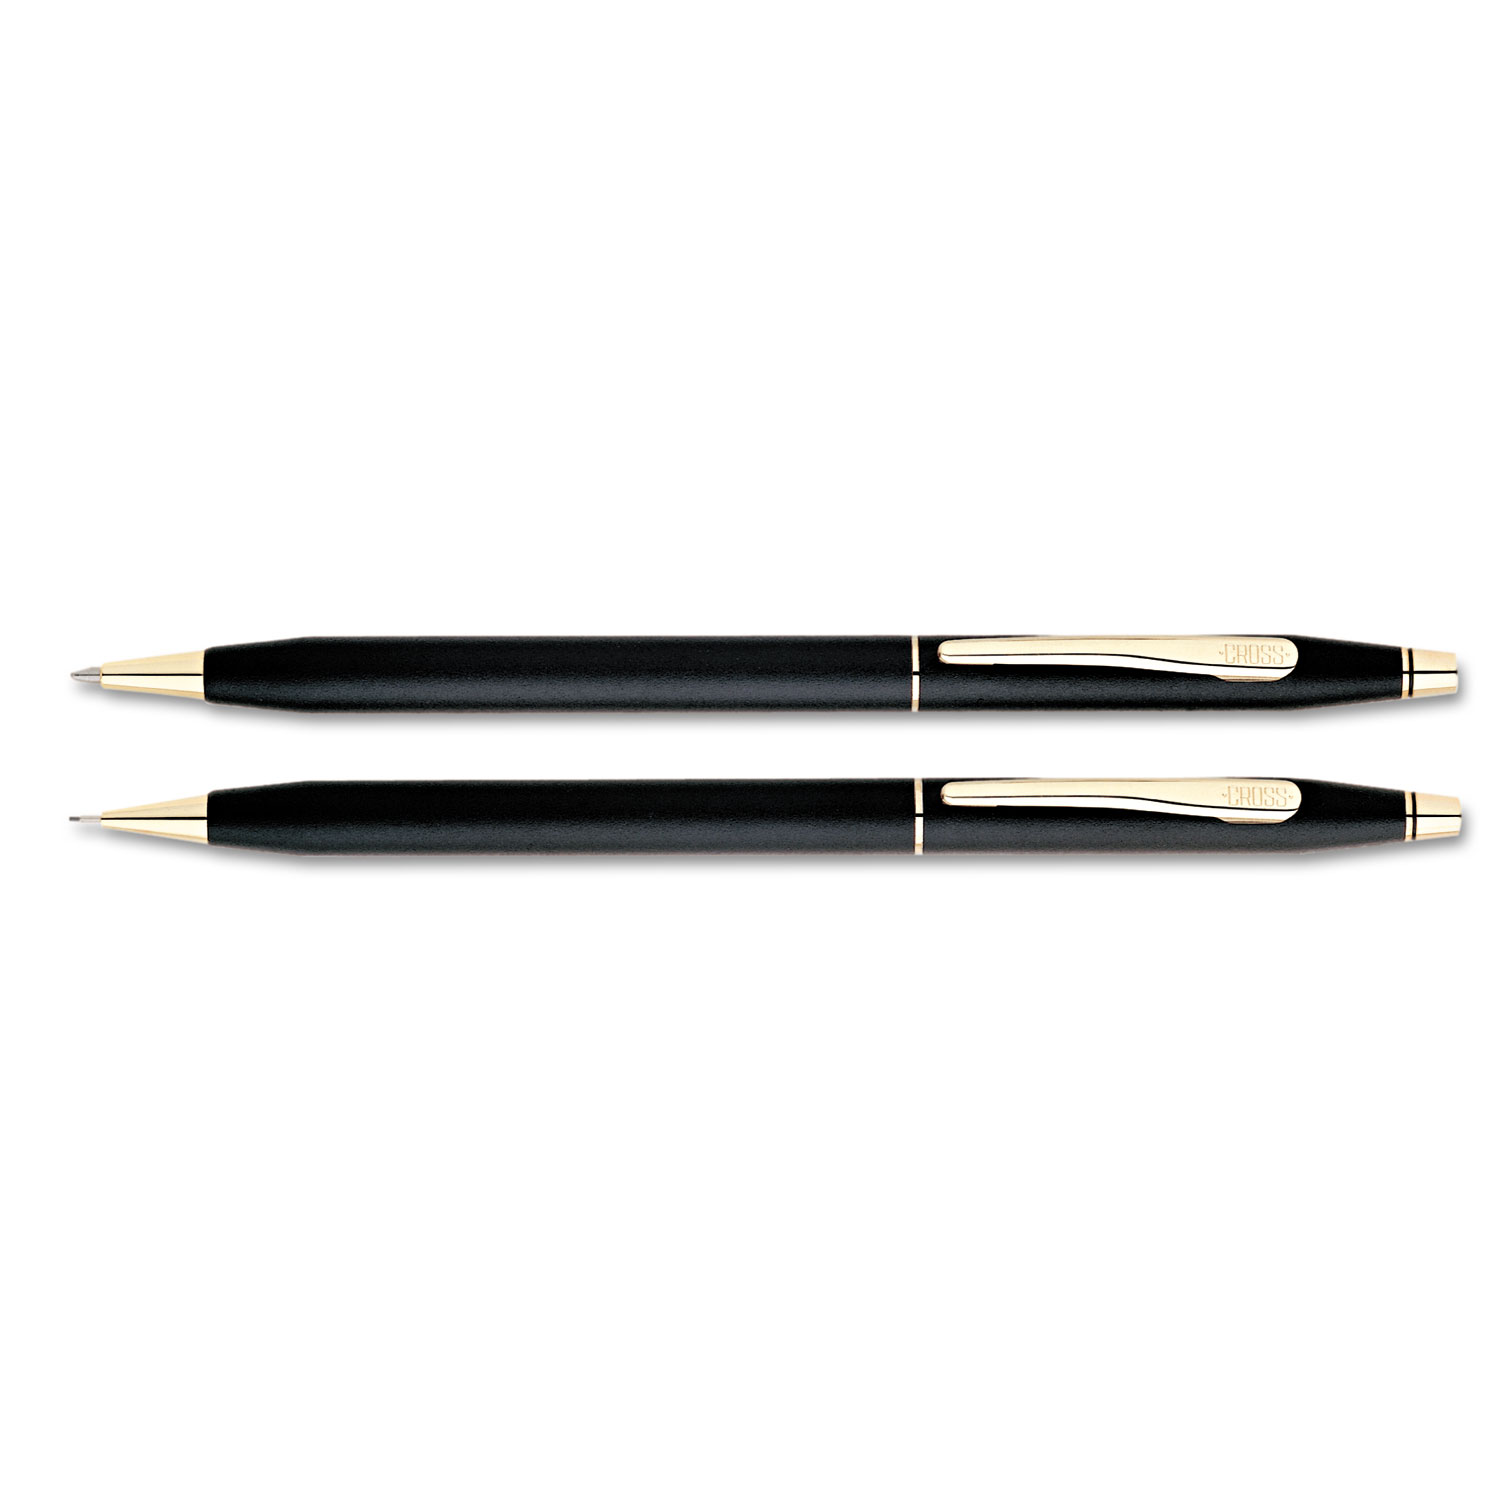  Cross 250105 Classic Century Ballpoint Pen and Pencil Set, Medium Black Pen, Black HB Pencil, Black/Gold Barrel (CRO250105) 